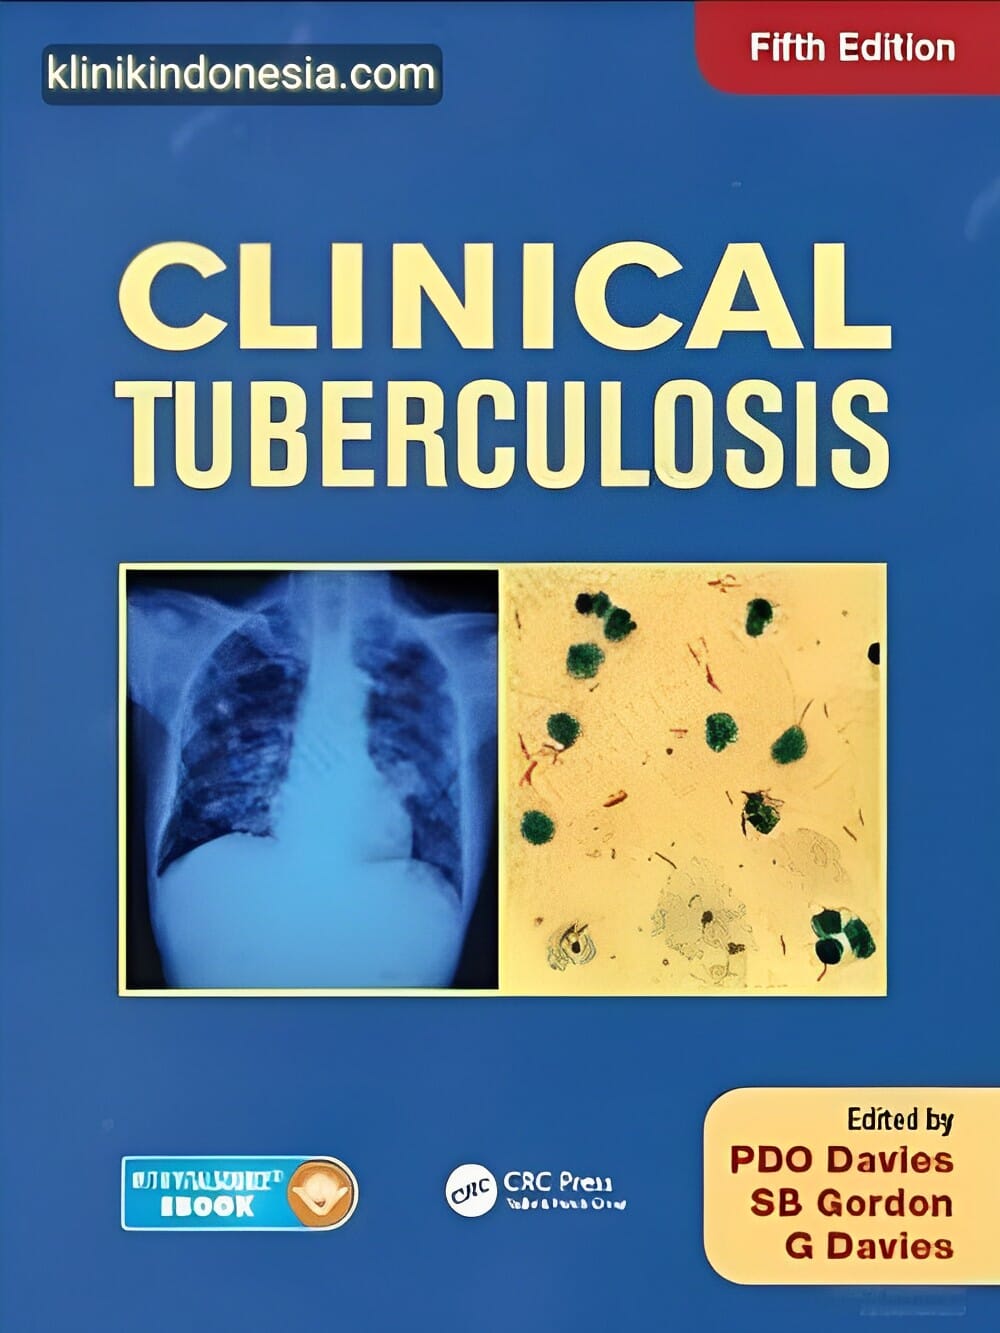 Gambar CD Ebook Clinical Tuberculosis Fifth Edition